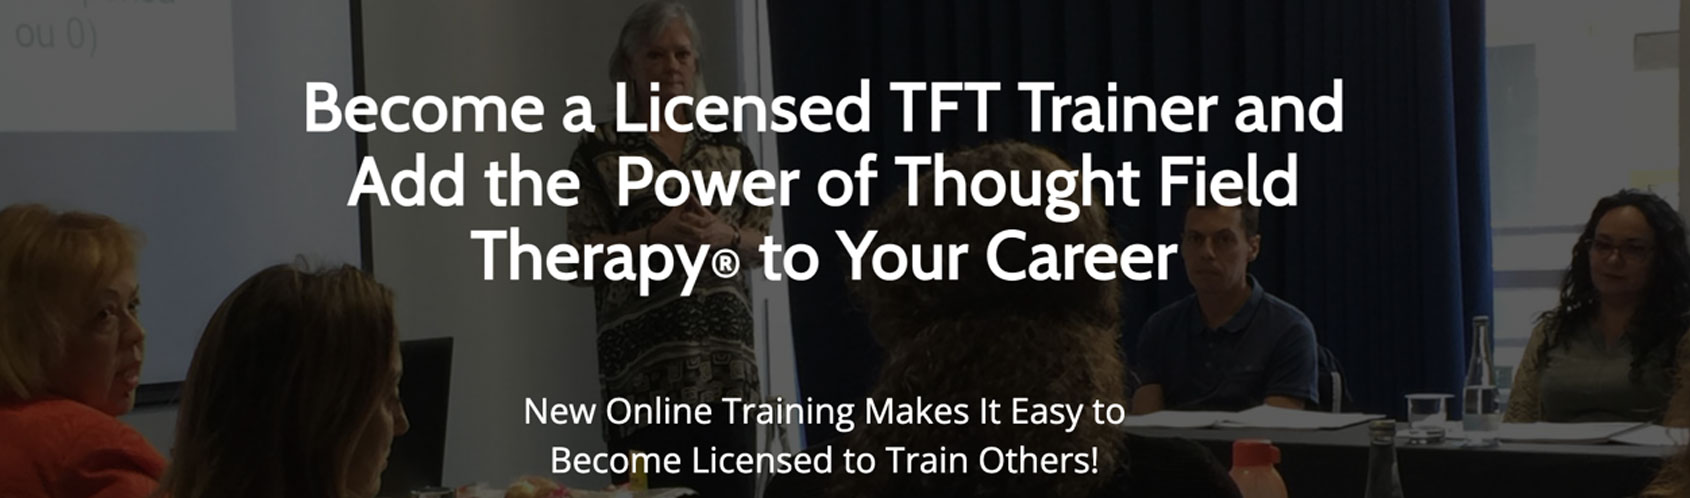 TFT Licensed Trainer